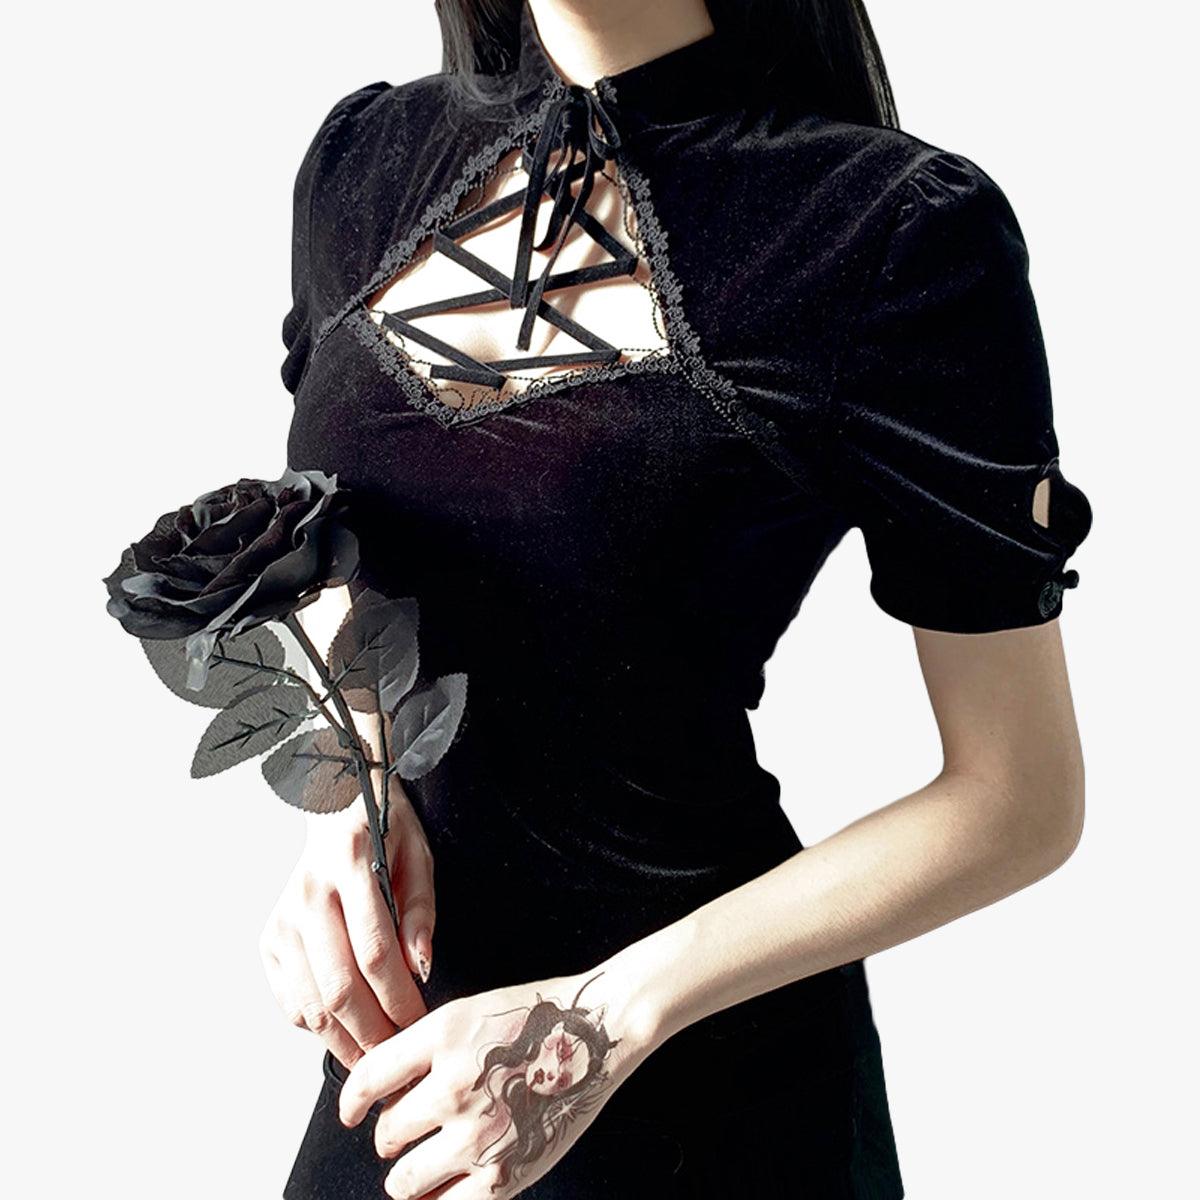 Darkcore Velvet Black Goth Dress • Aesthetic Clothes Shop